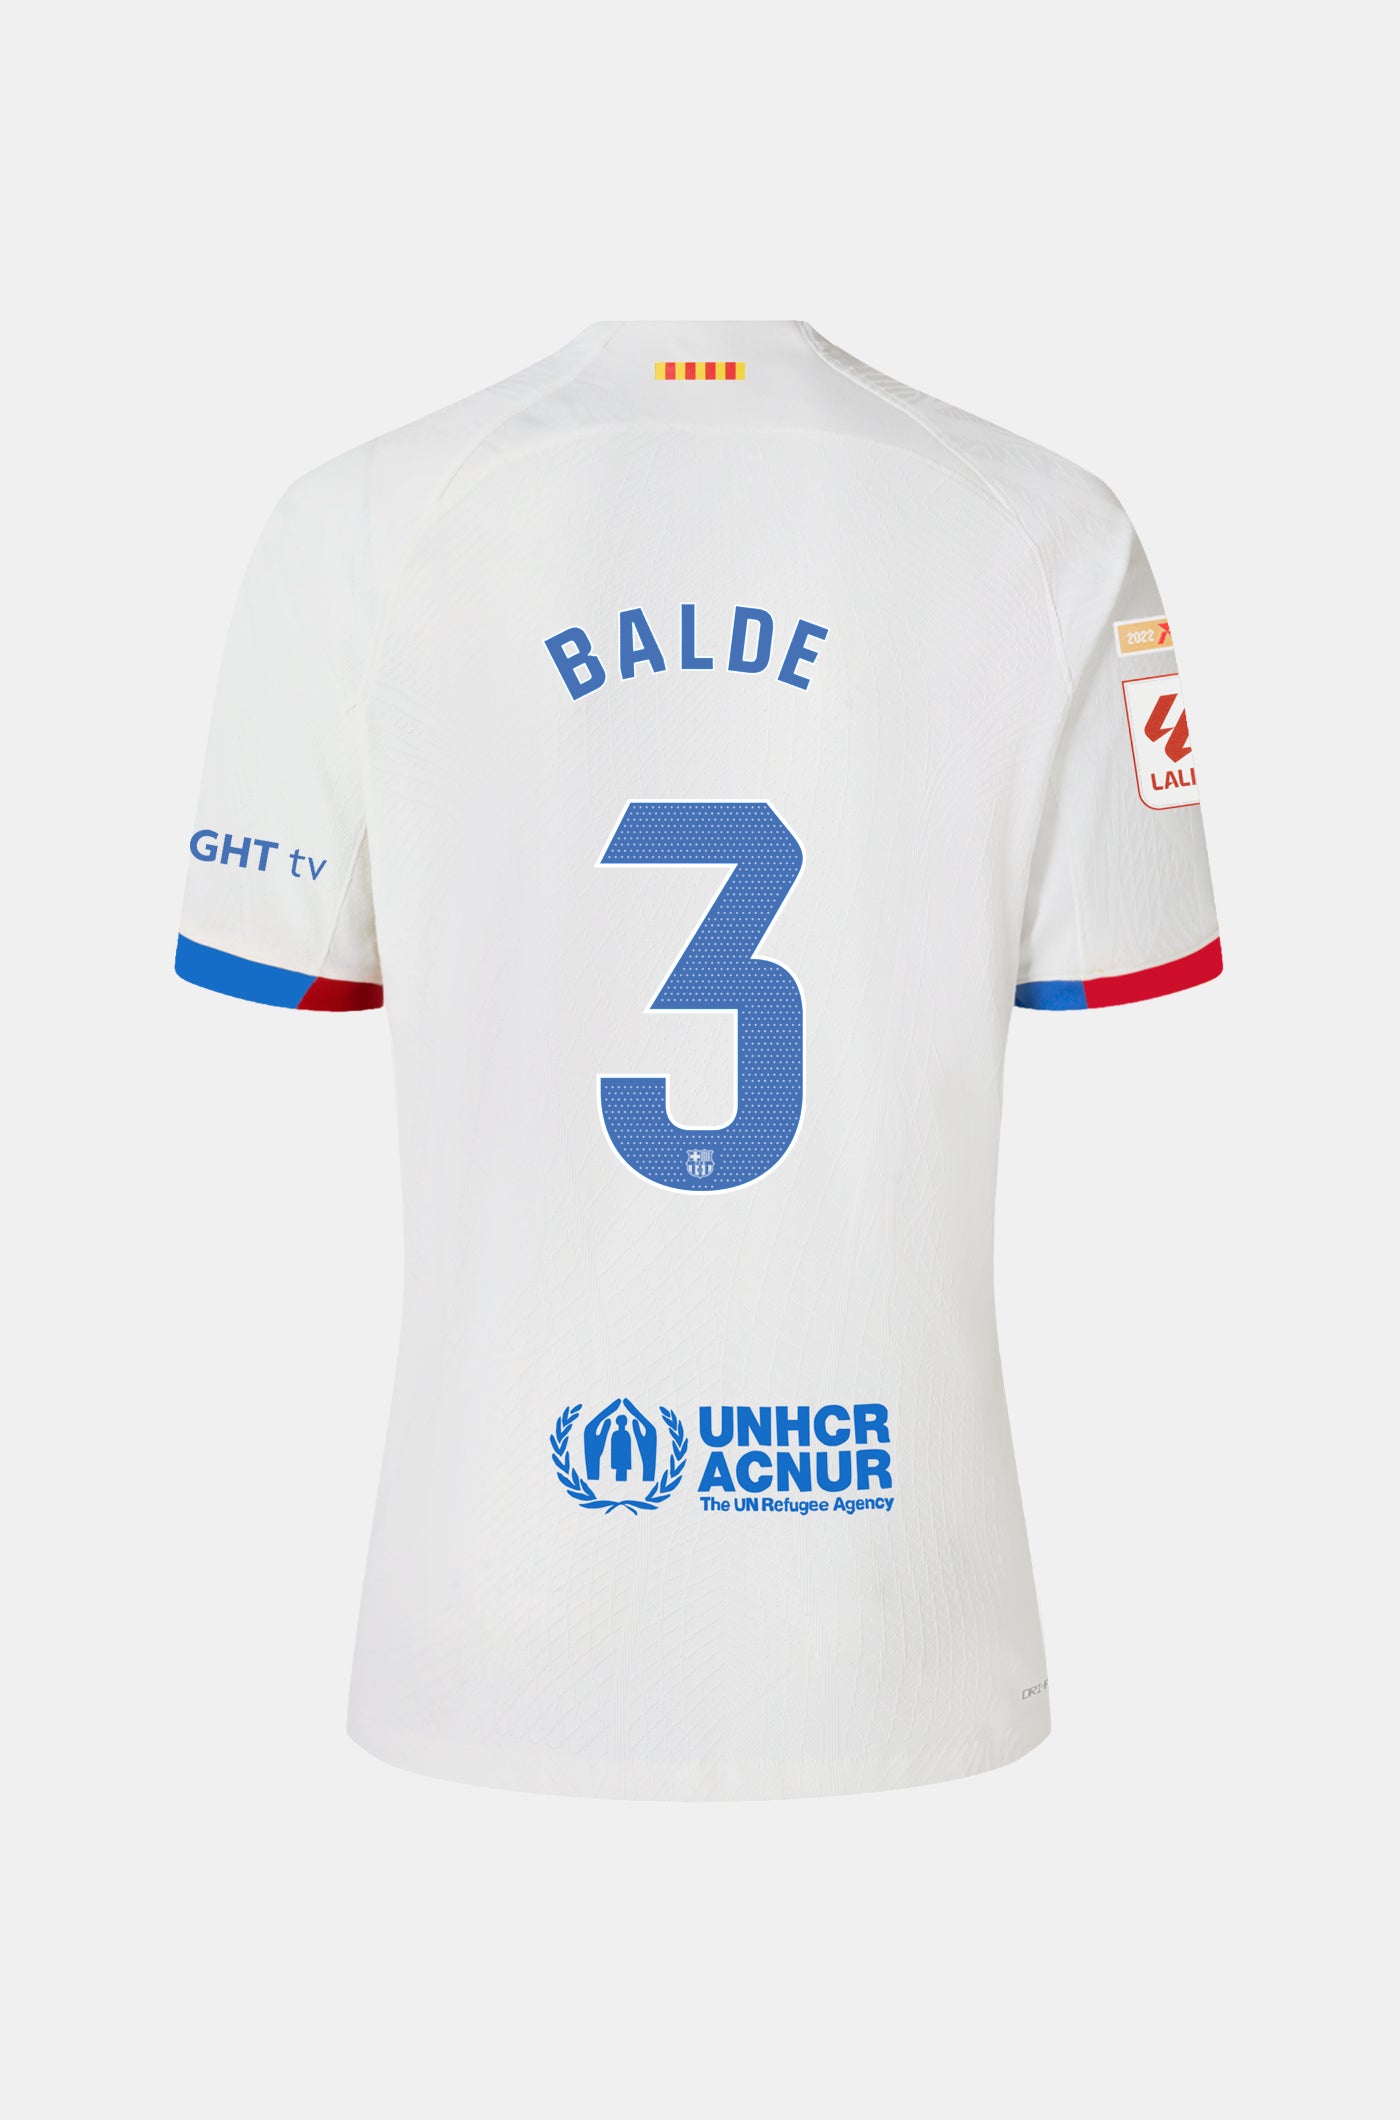 LFP FC Barcelona away shirt 23/24 Player’s Edition  - BALDE